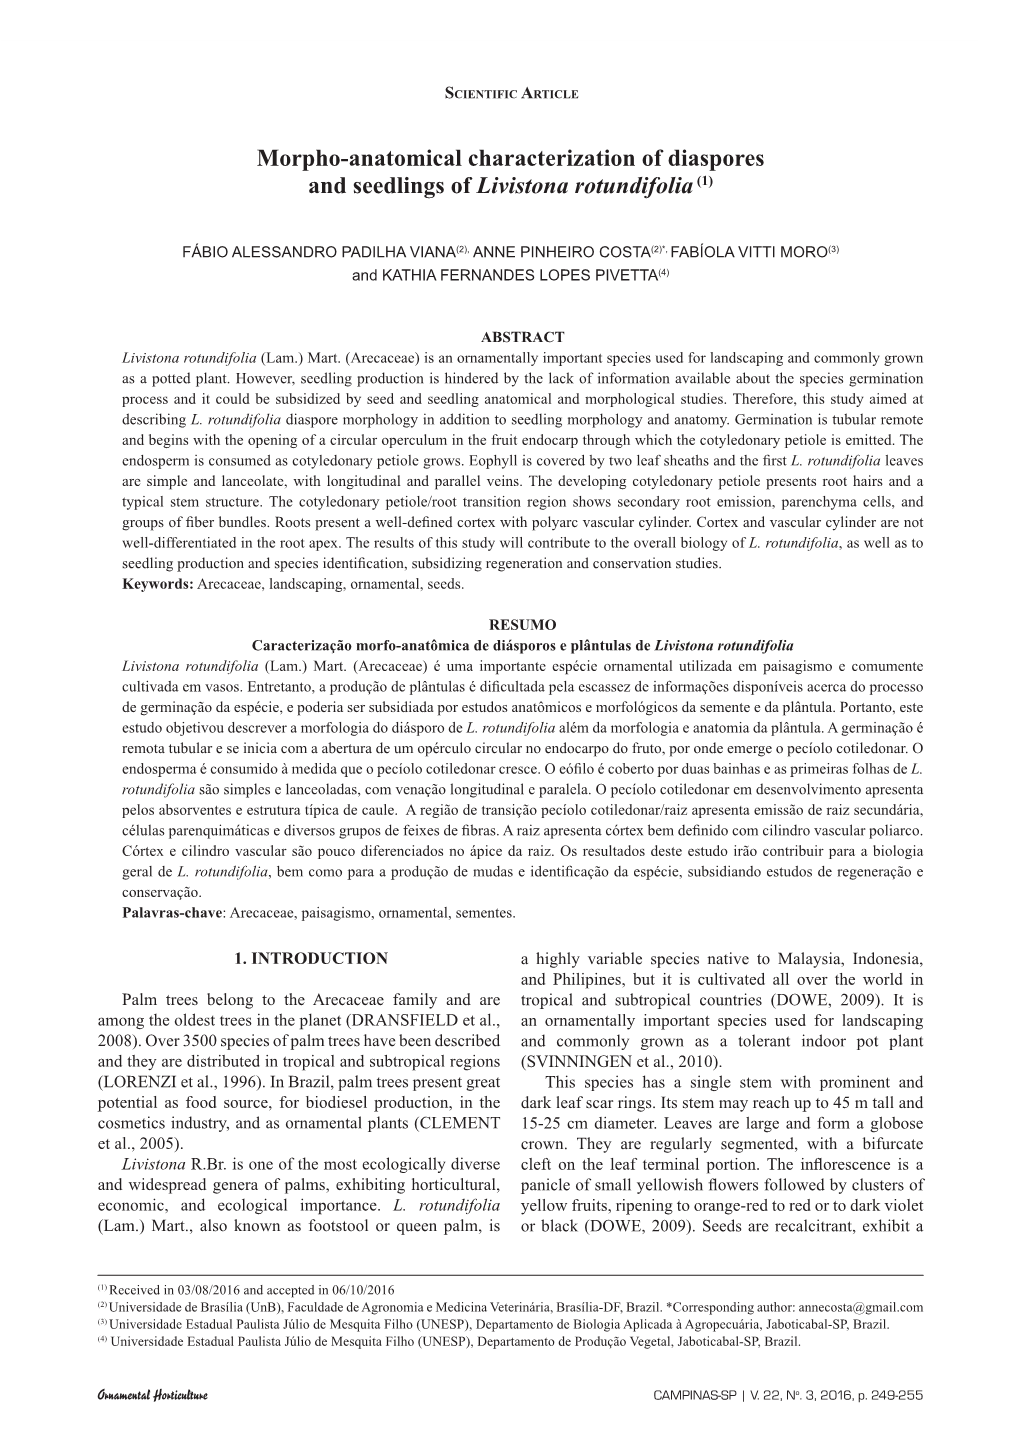 Morpho-Anatomical Characterization of Diaspores and Seedlings of Livistona Rotundifolia (1)